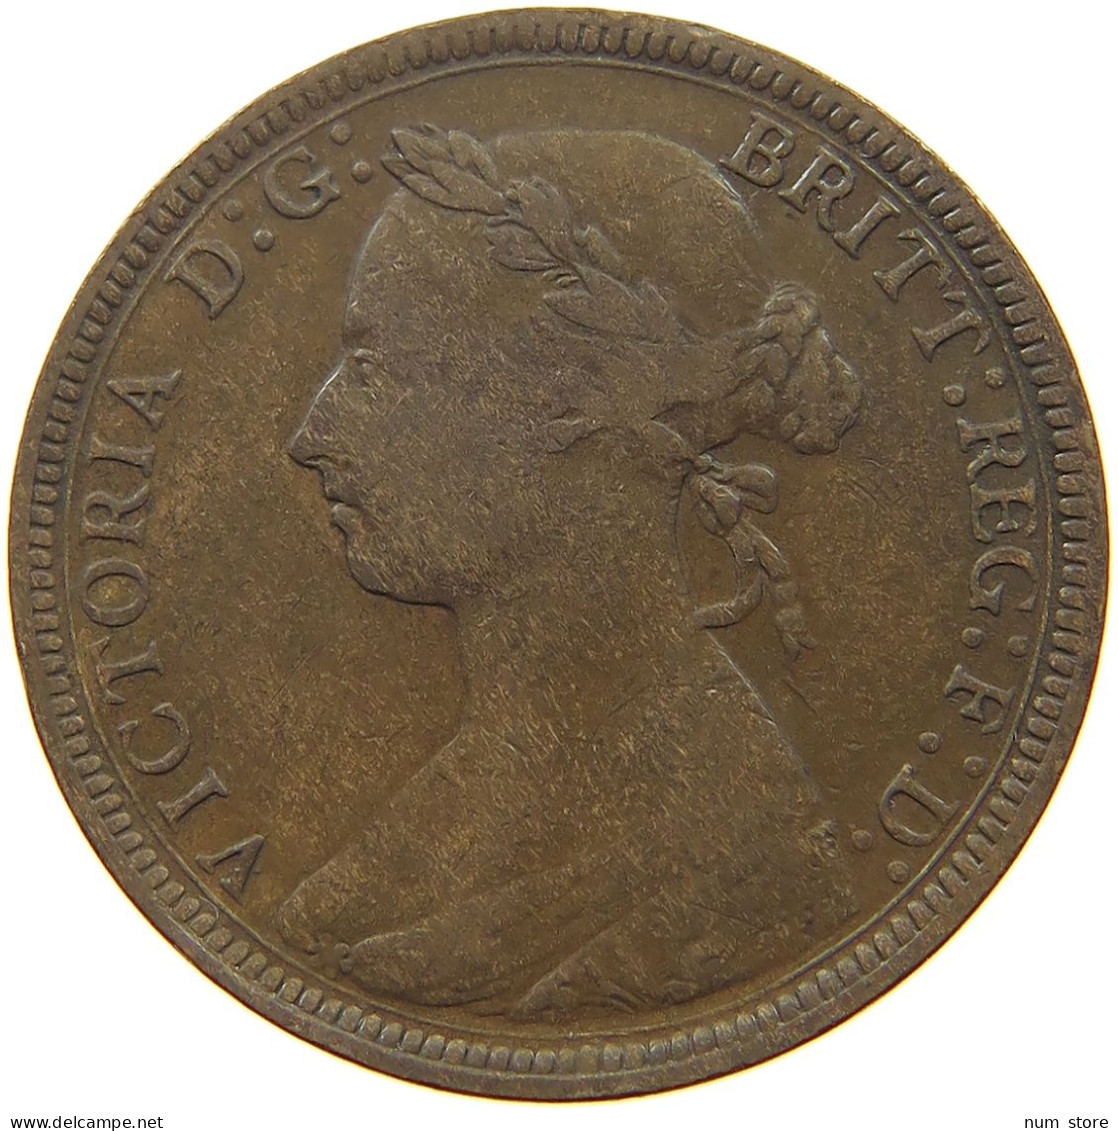 GREAT BRITAIN HALFPENNY 1886 Victoria 1837-1901 #a002 0427 - C. 1/2 Penny